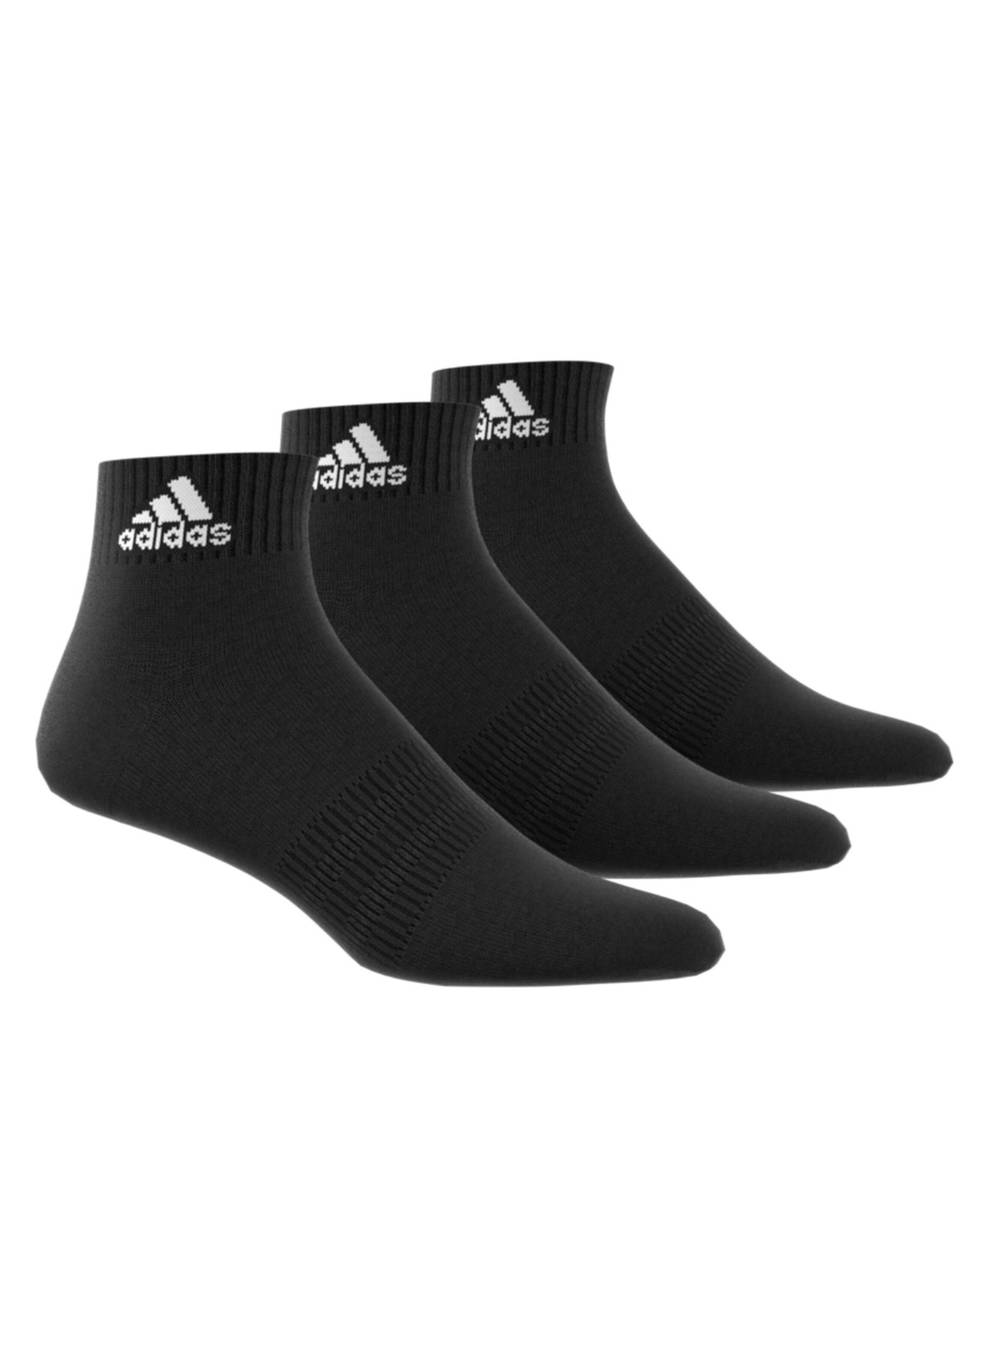 Adidas pack 3 calcetín urbana style (color: negro. talla: m)